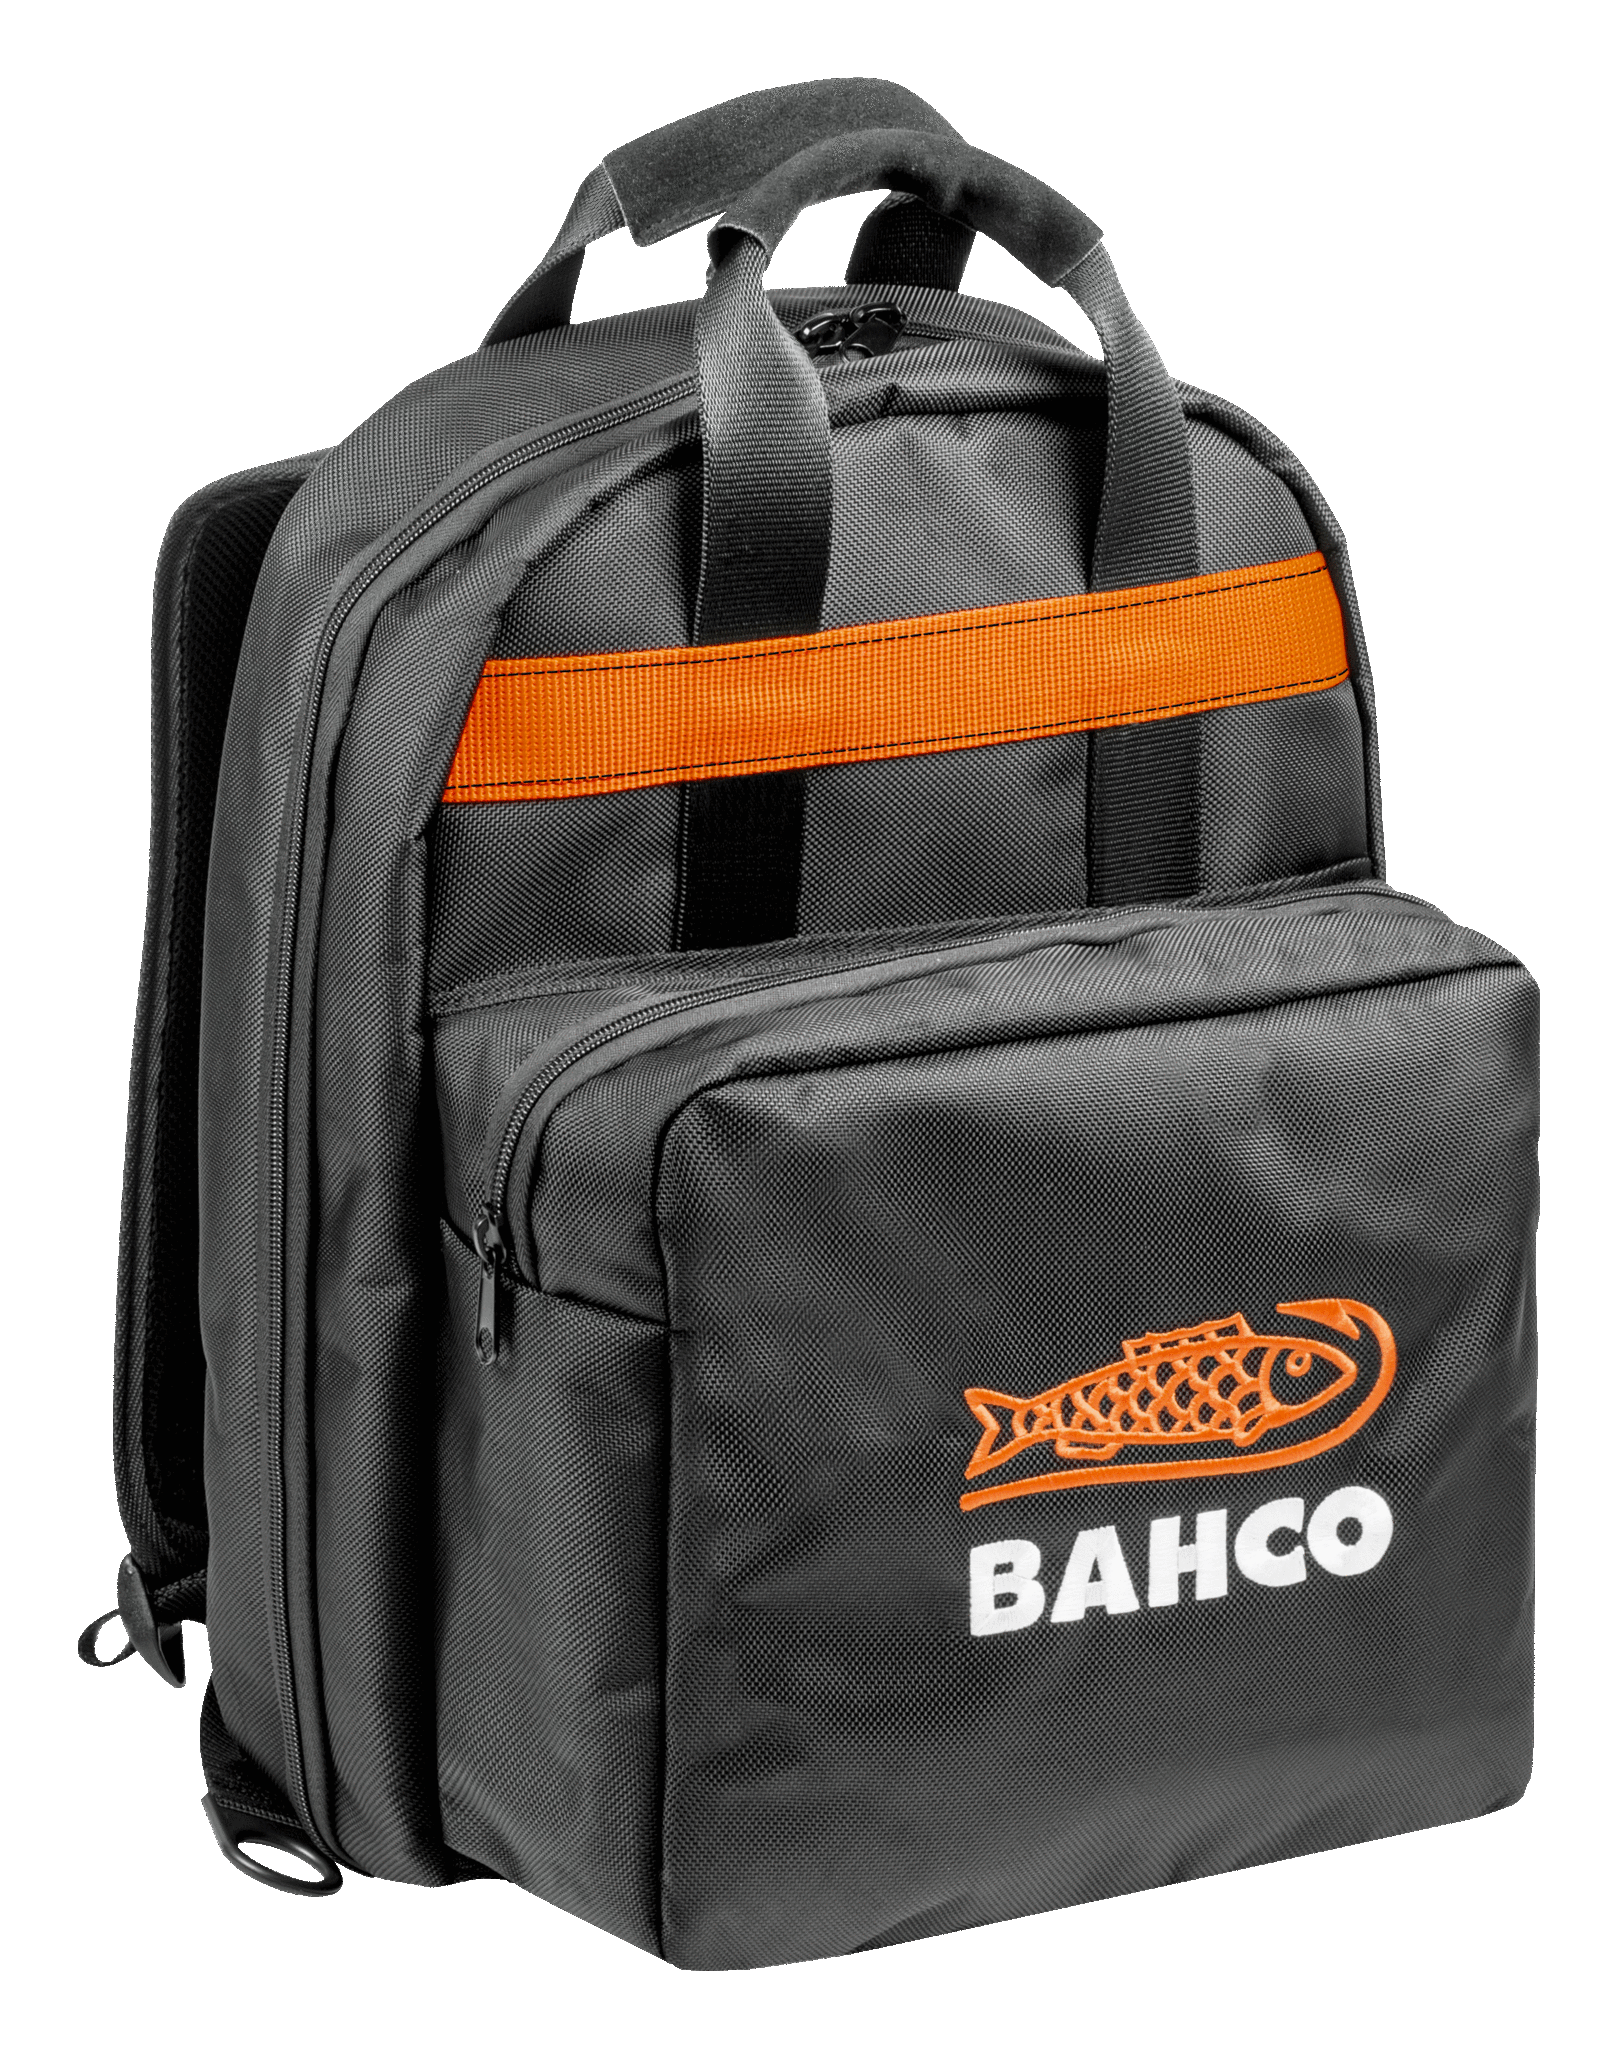 BAHCO(バーコ) Back Pack リュックサック ラージ 3875-BP2 - 3